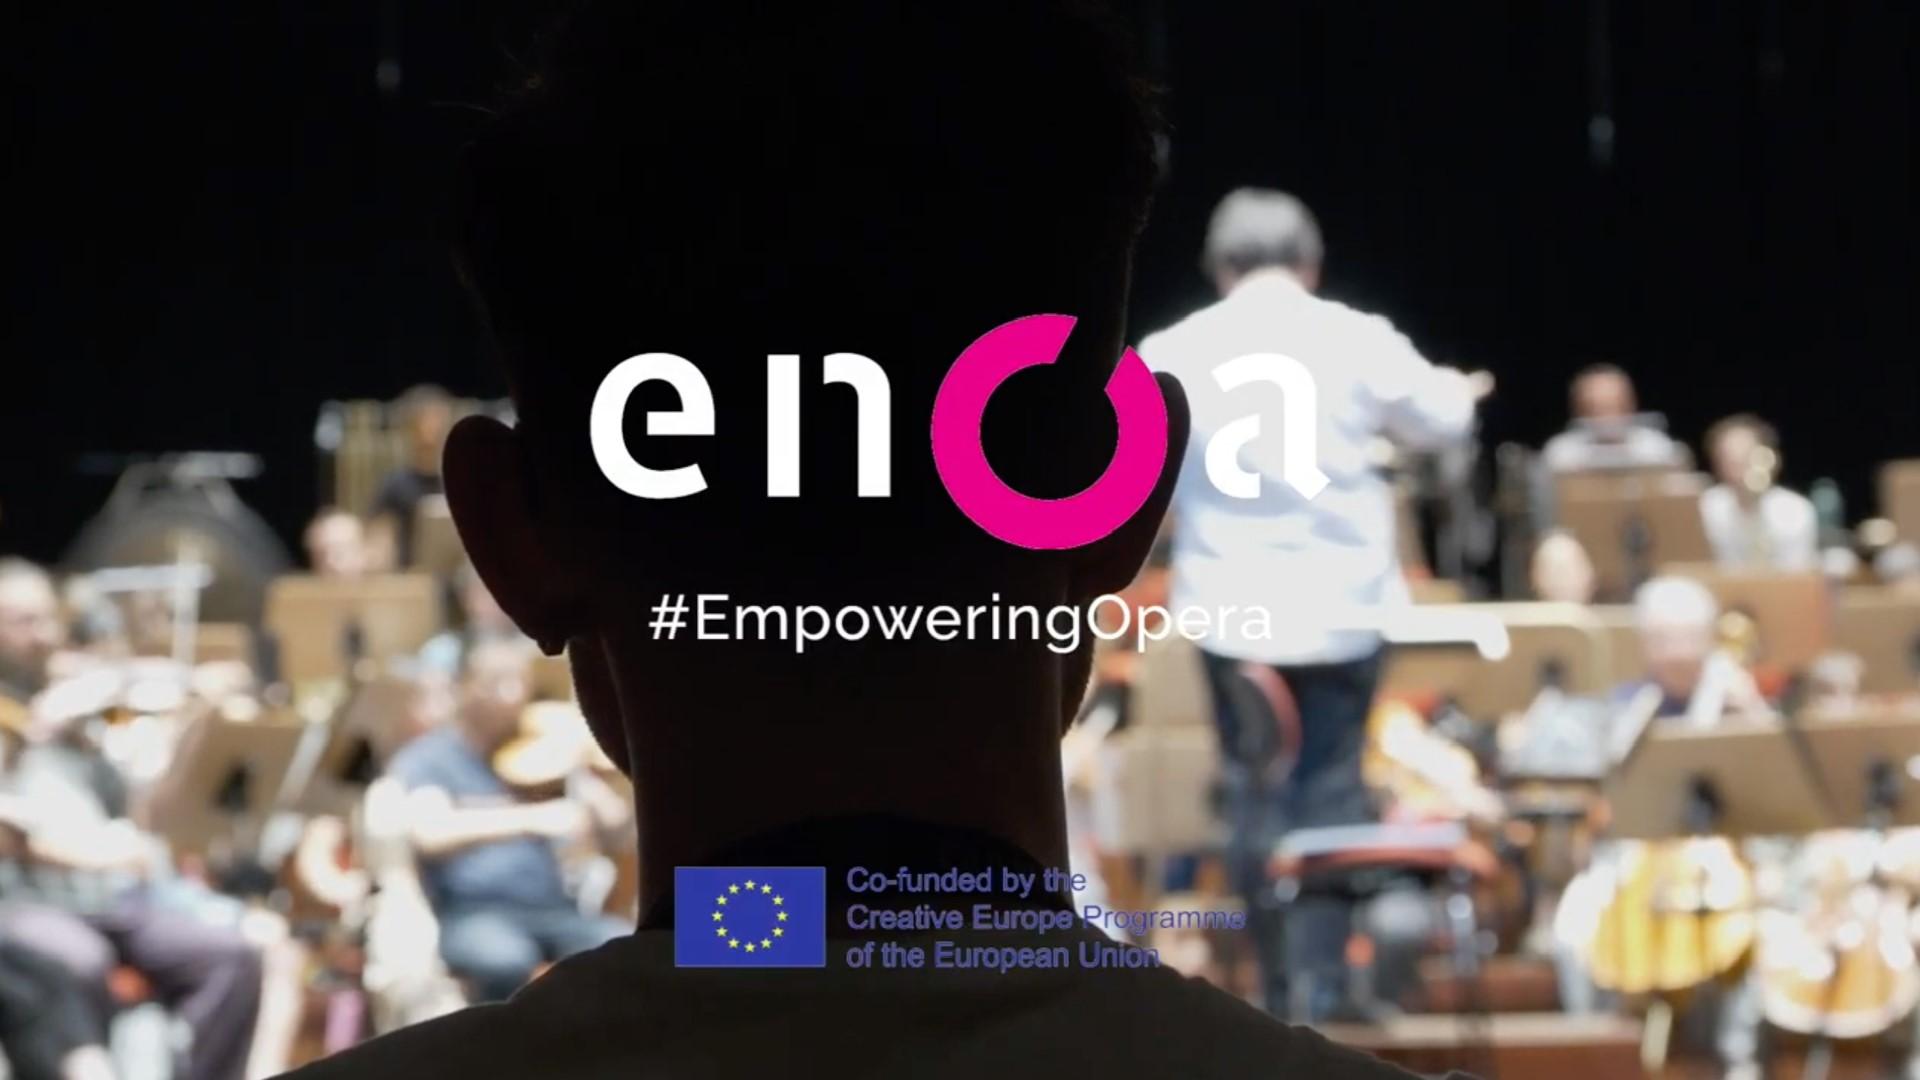 enoa — Empowering Opera